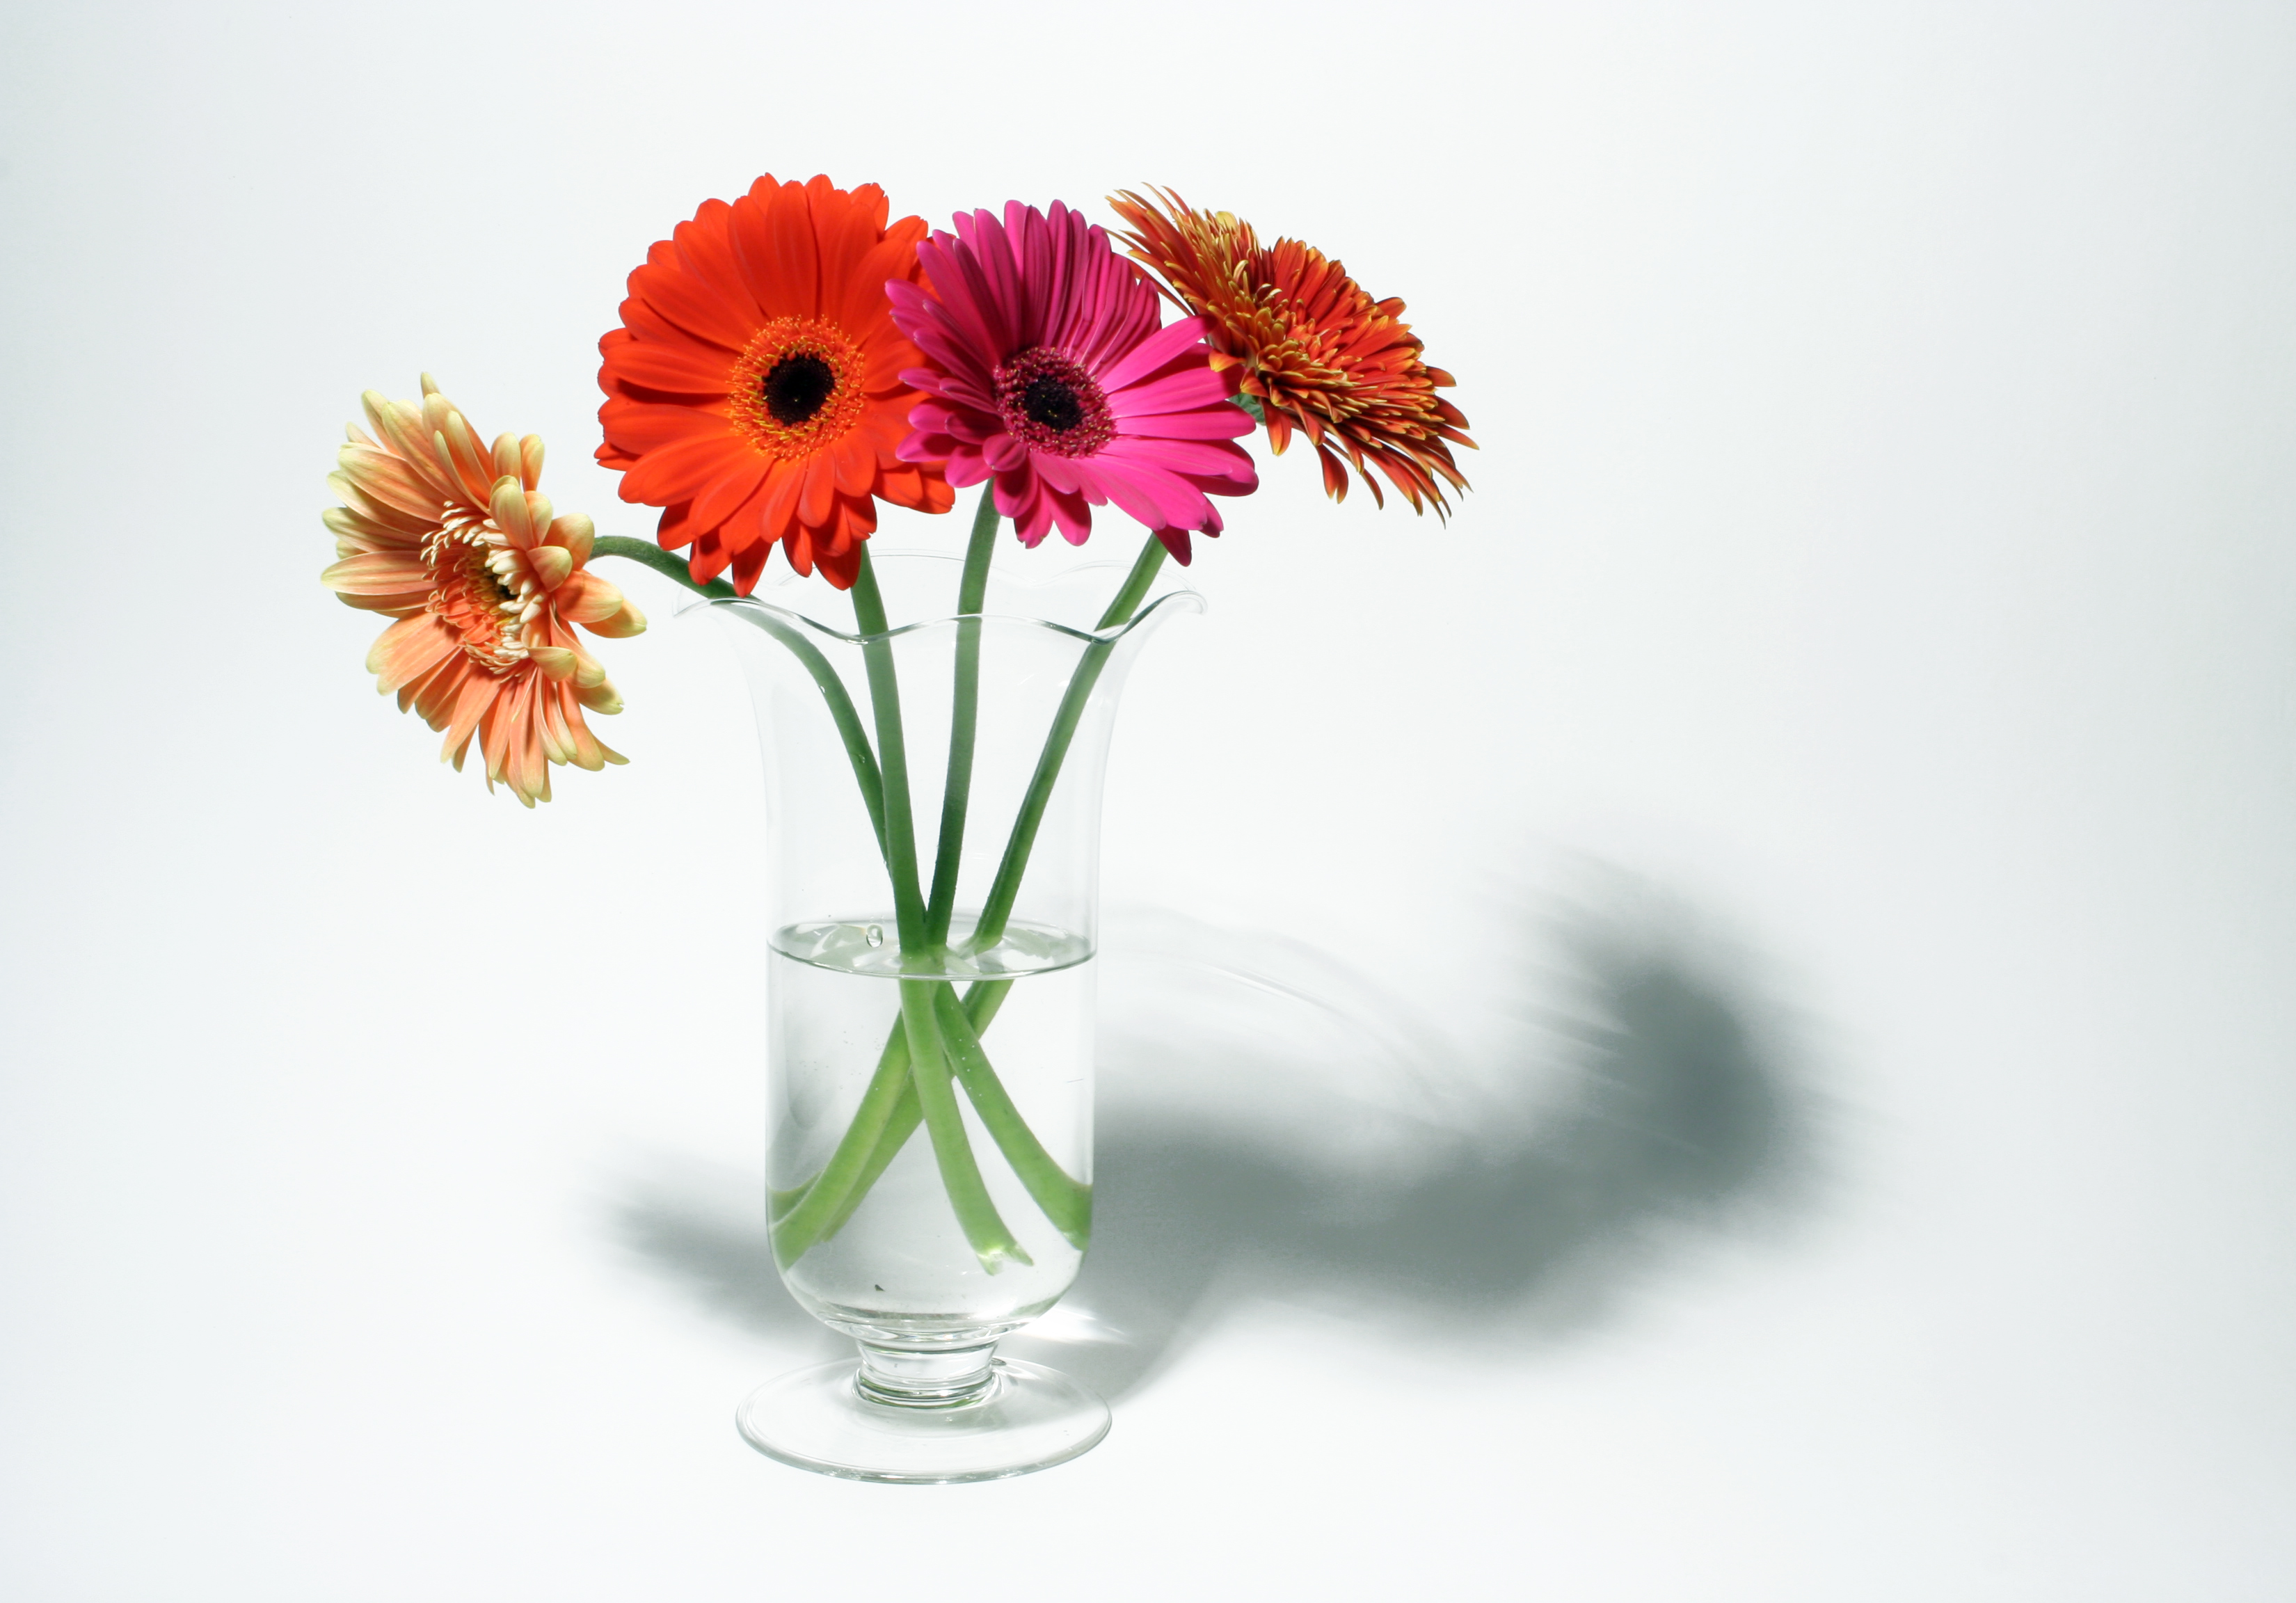 How to create a gerbera daisy bouquet - Flower PressFlower Press